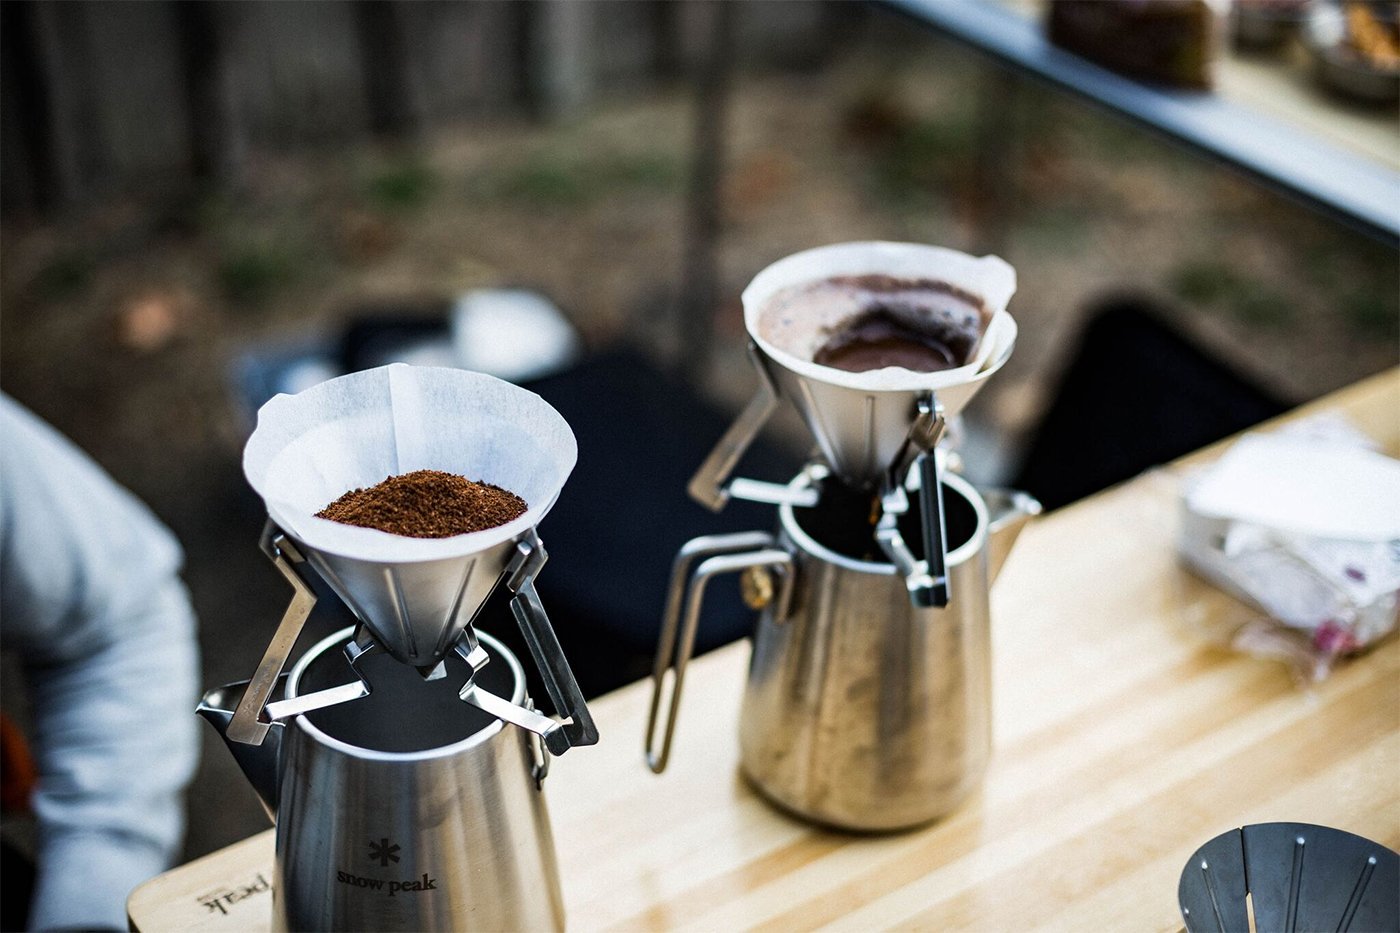 Snow Peak - Field Barista Coffee Drip - Space Camp